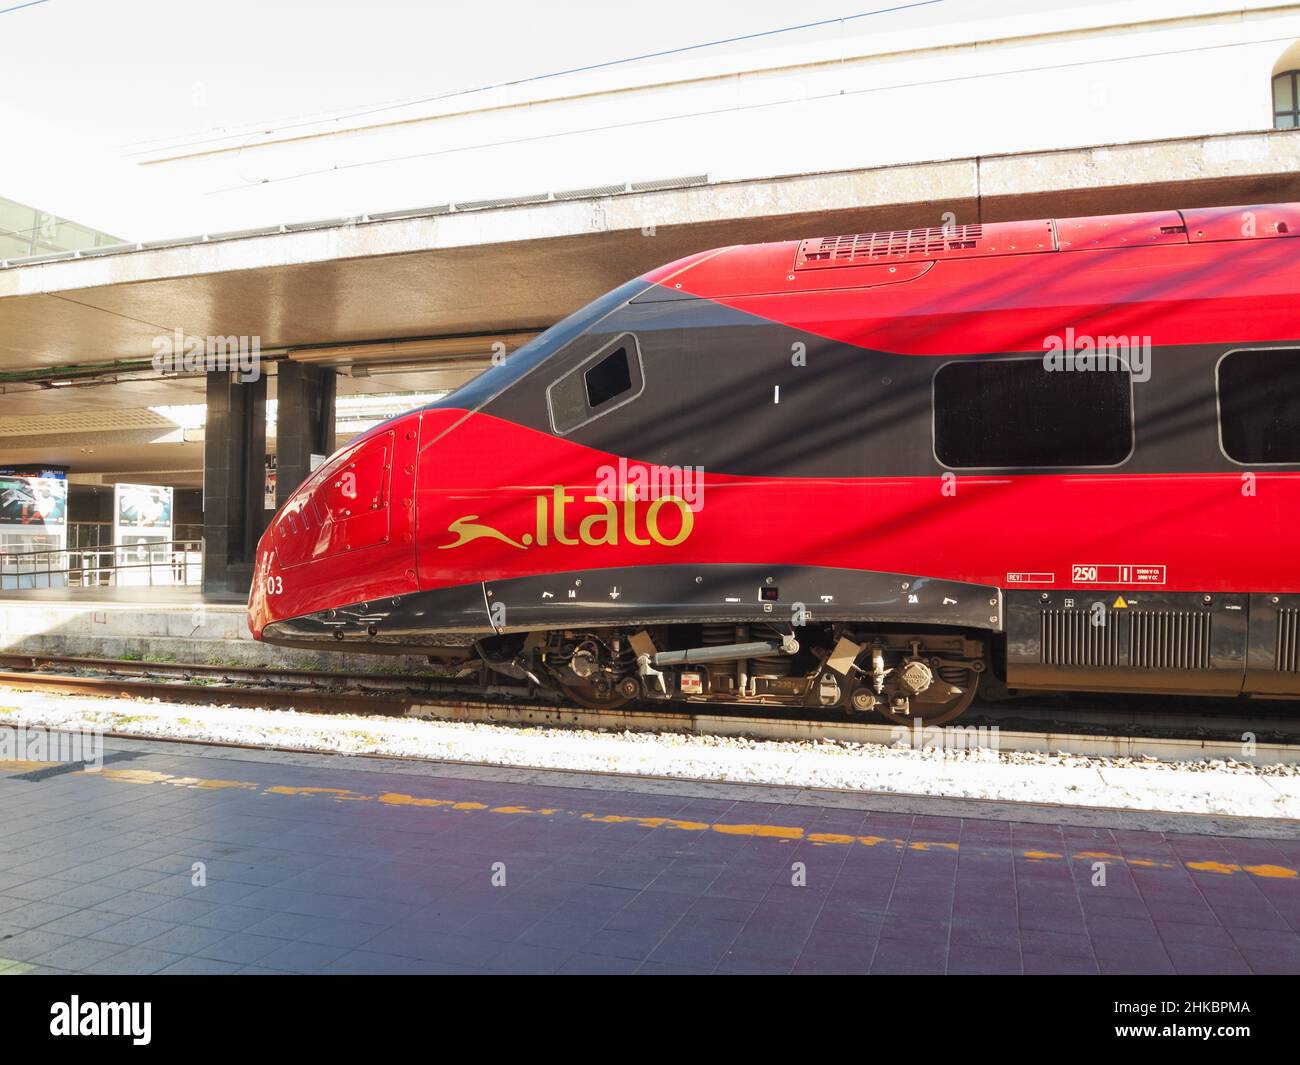 Roma Termini railway station, NTV Italo intercity fast train on platform Stock Photo